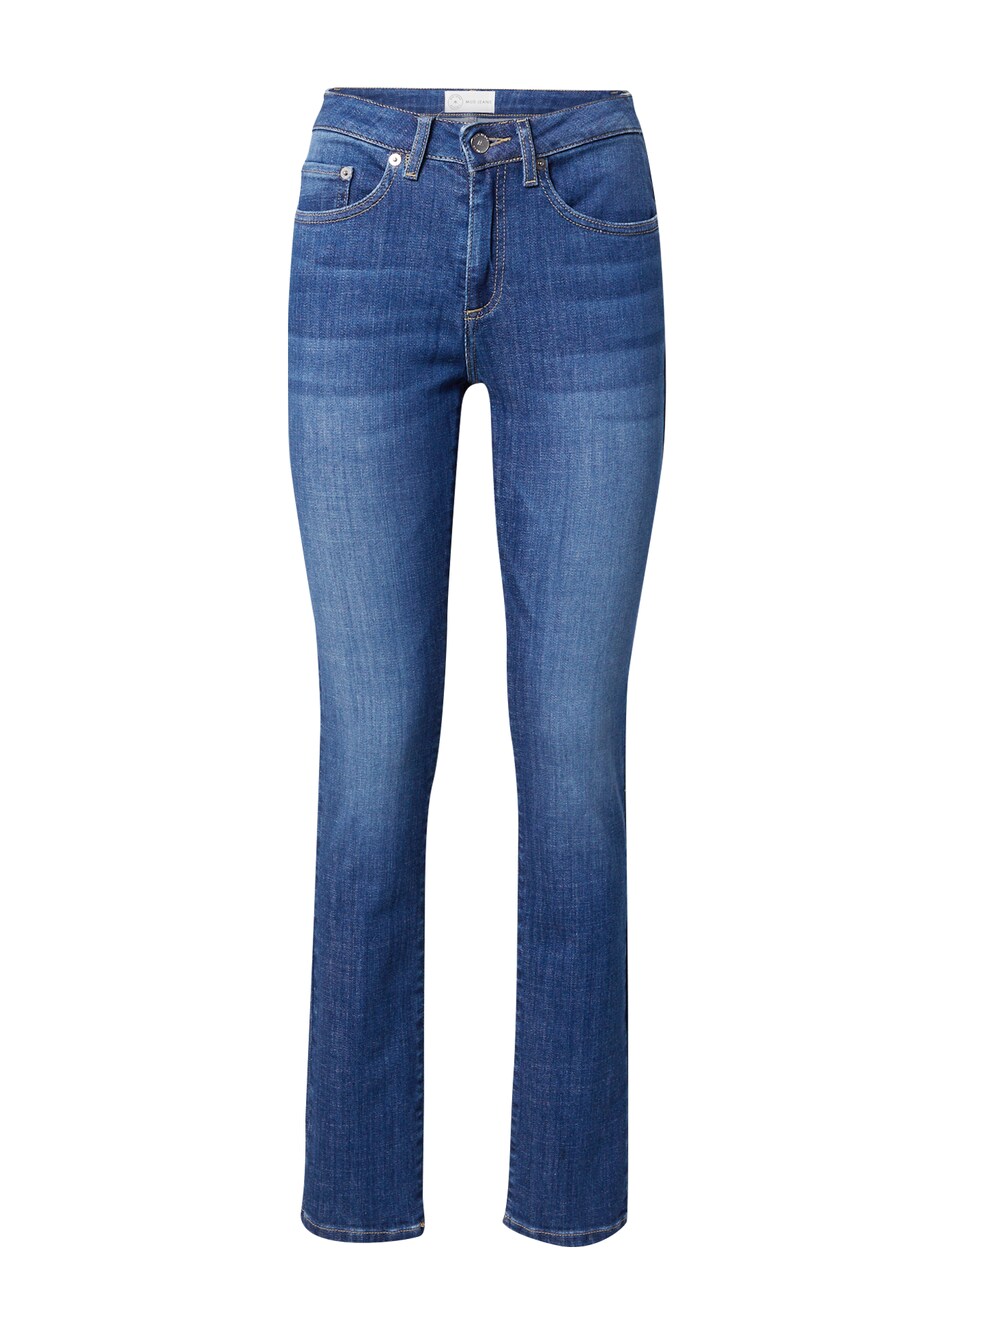 Обычные джинсы Mud Jeans Faye Straight, синий широкие джинсы mud jeans sara синий